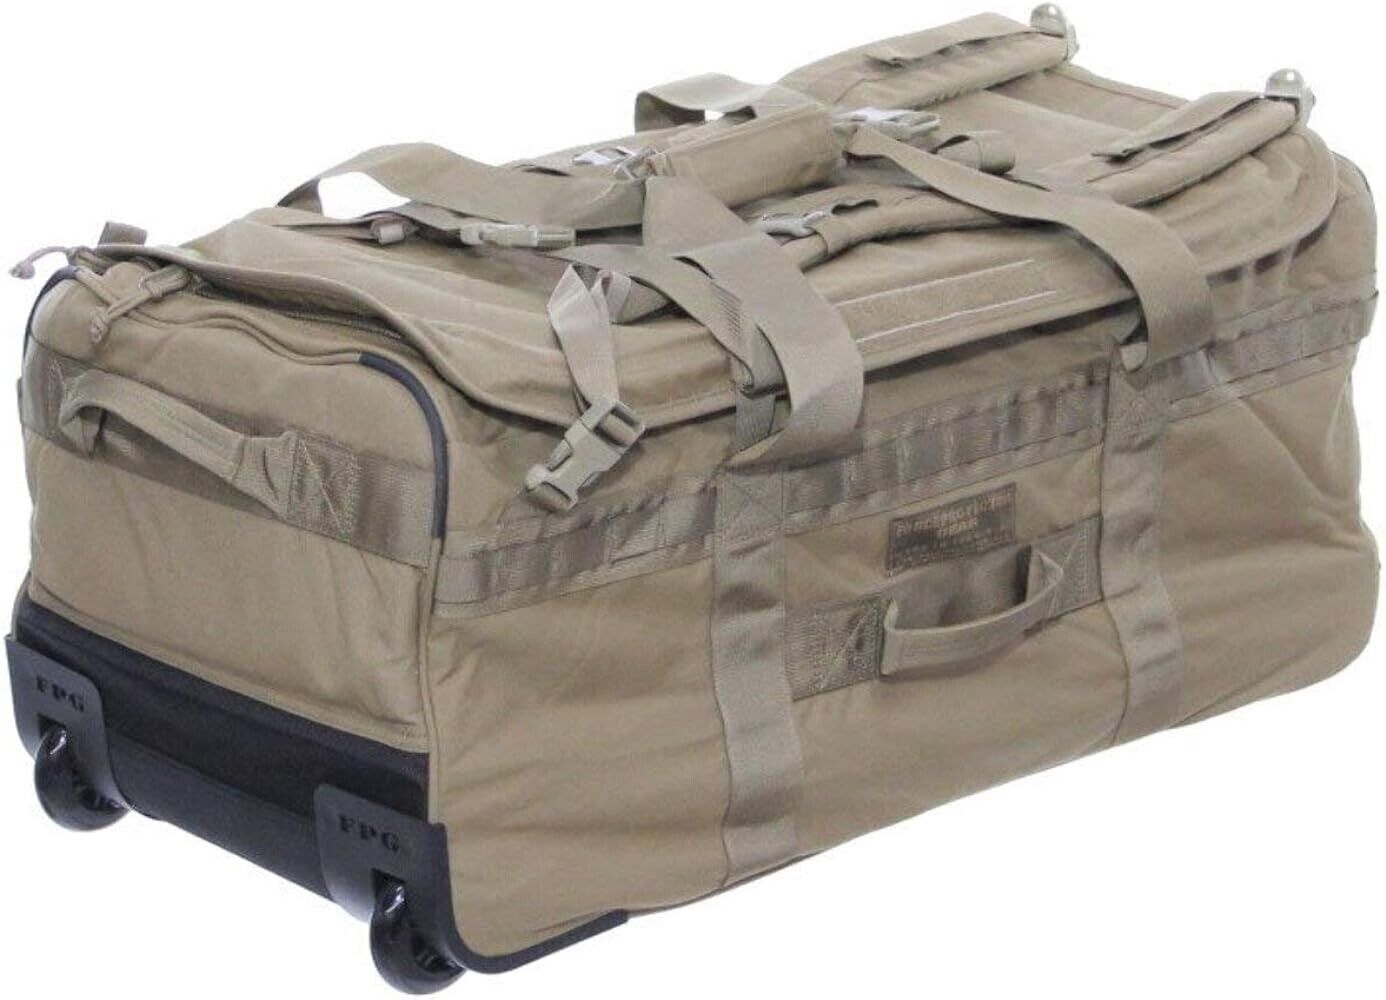 USMC Force Protector Gear Deployer USGI Deployment Bag on Wheels COLLAPSIBLE